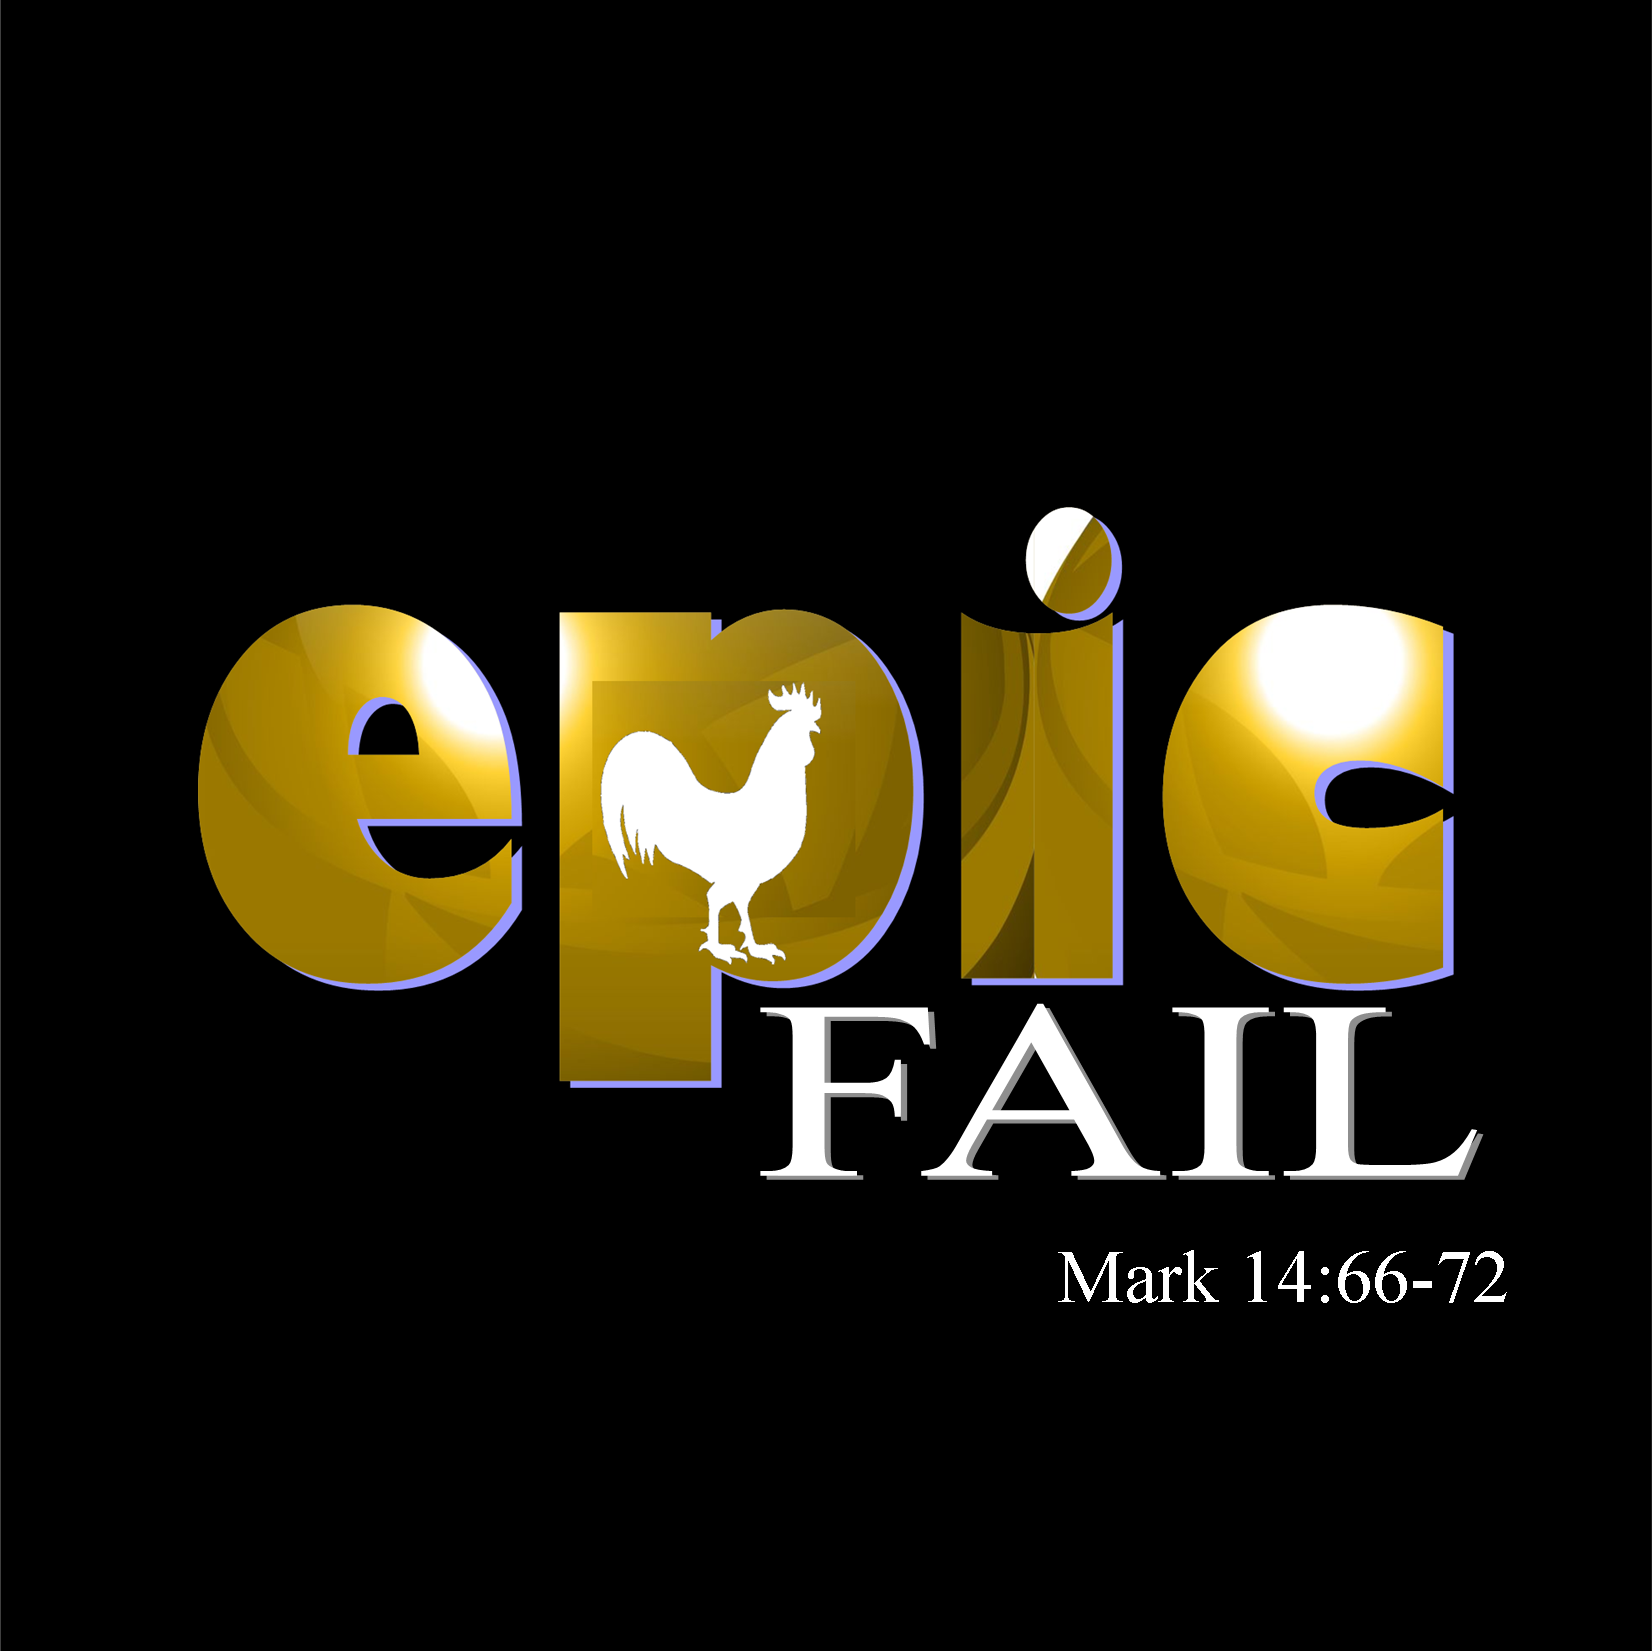 Epic Fail - Mark 14:66-72